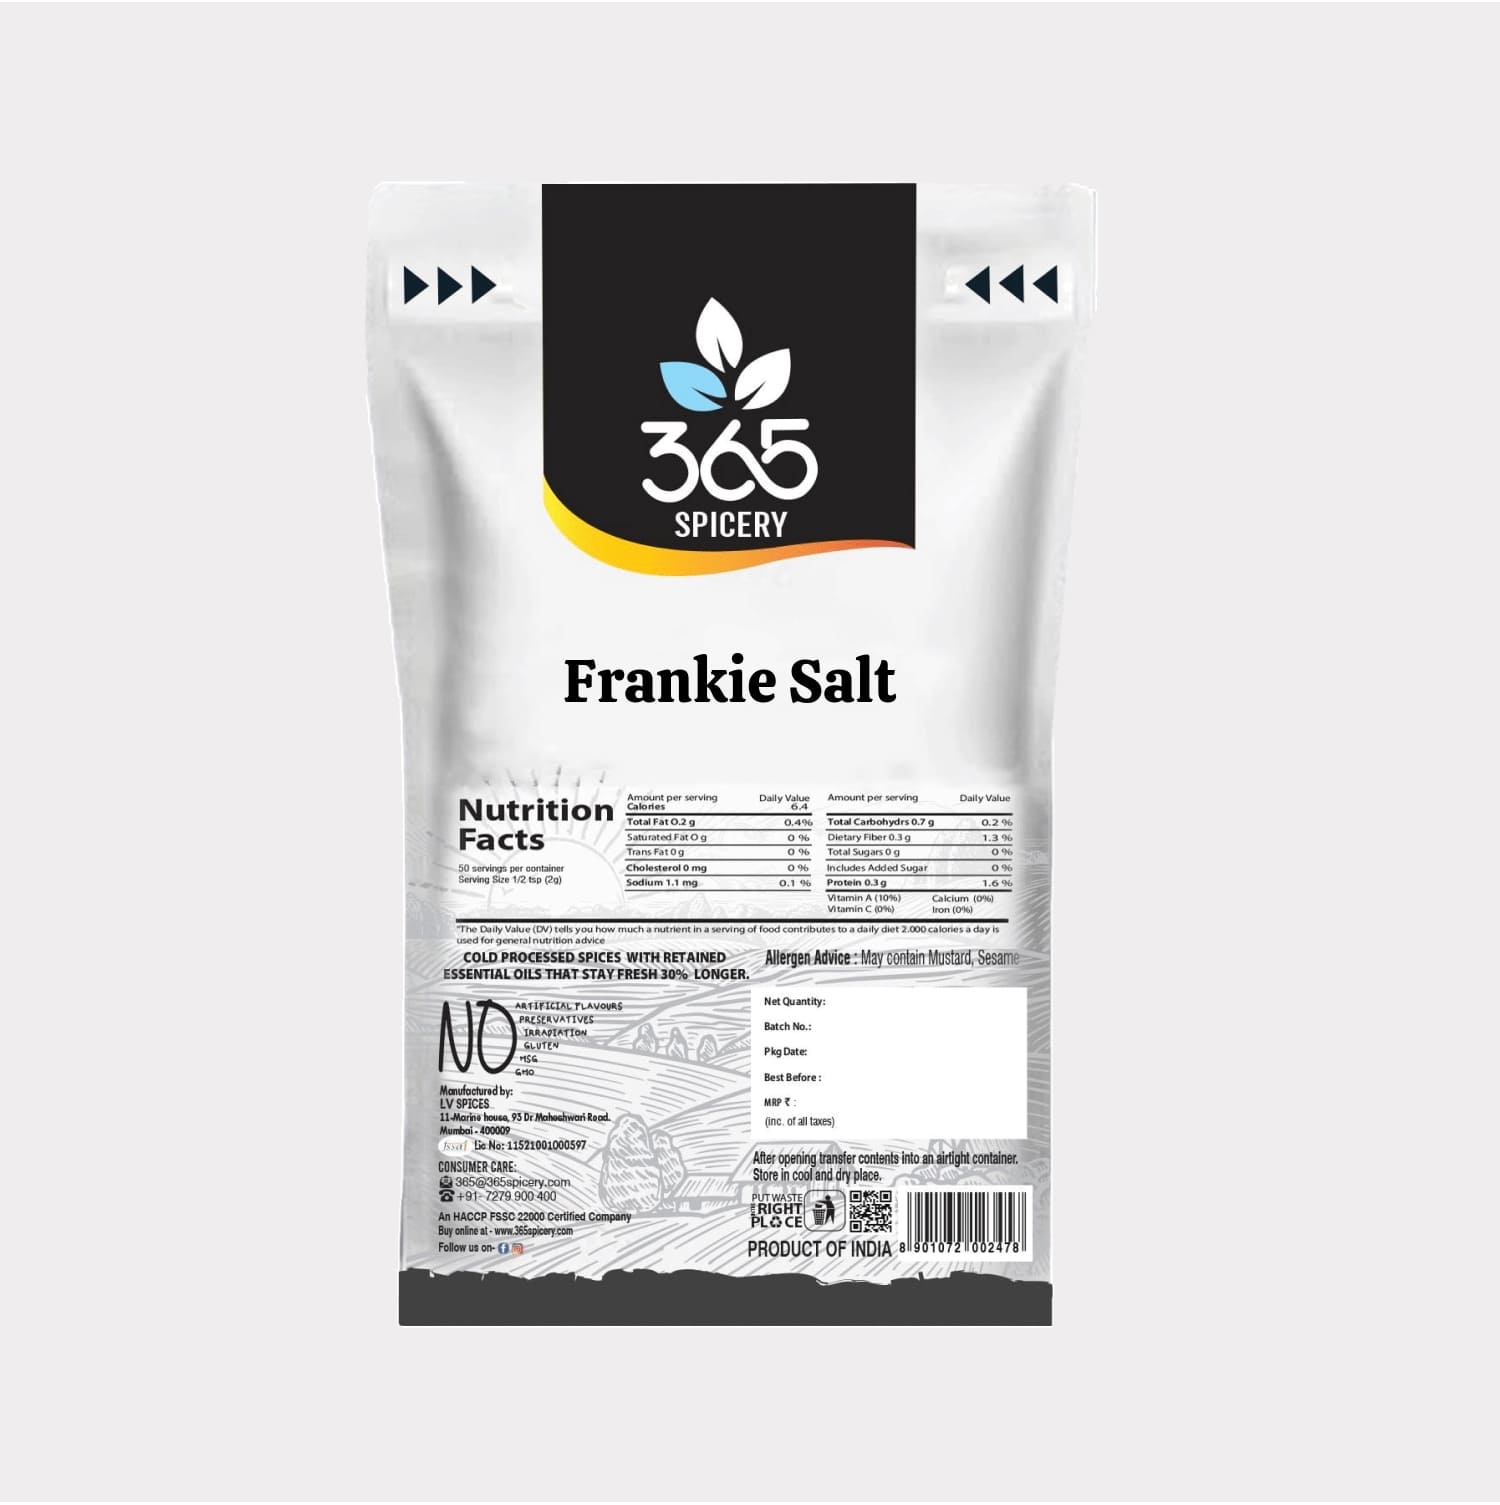 Frankie Salt